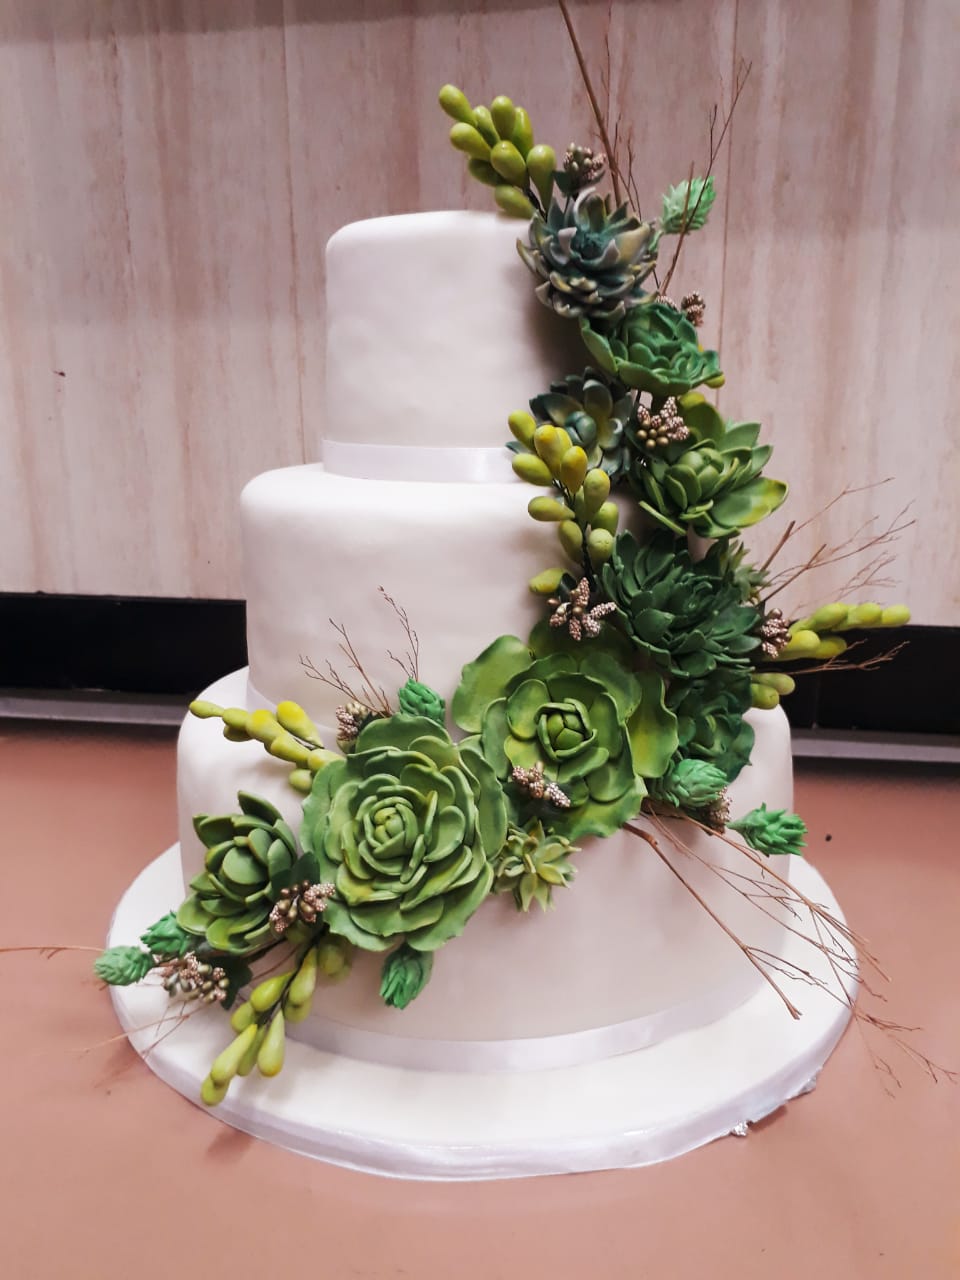 Sweet Art Cakes - Wedding Cakes, Pastries, Desserts in Goa